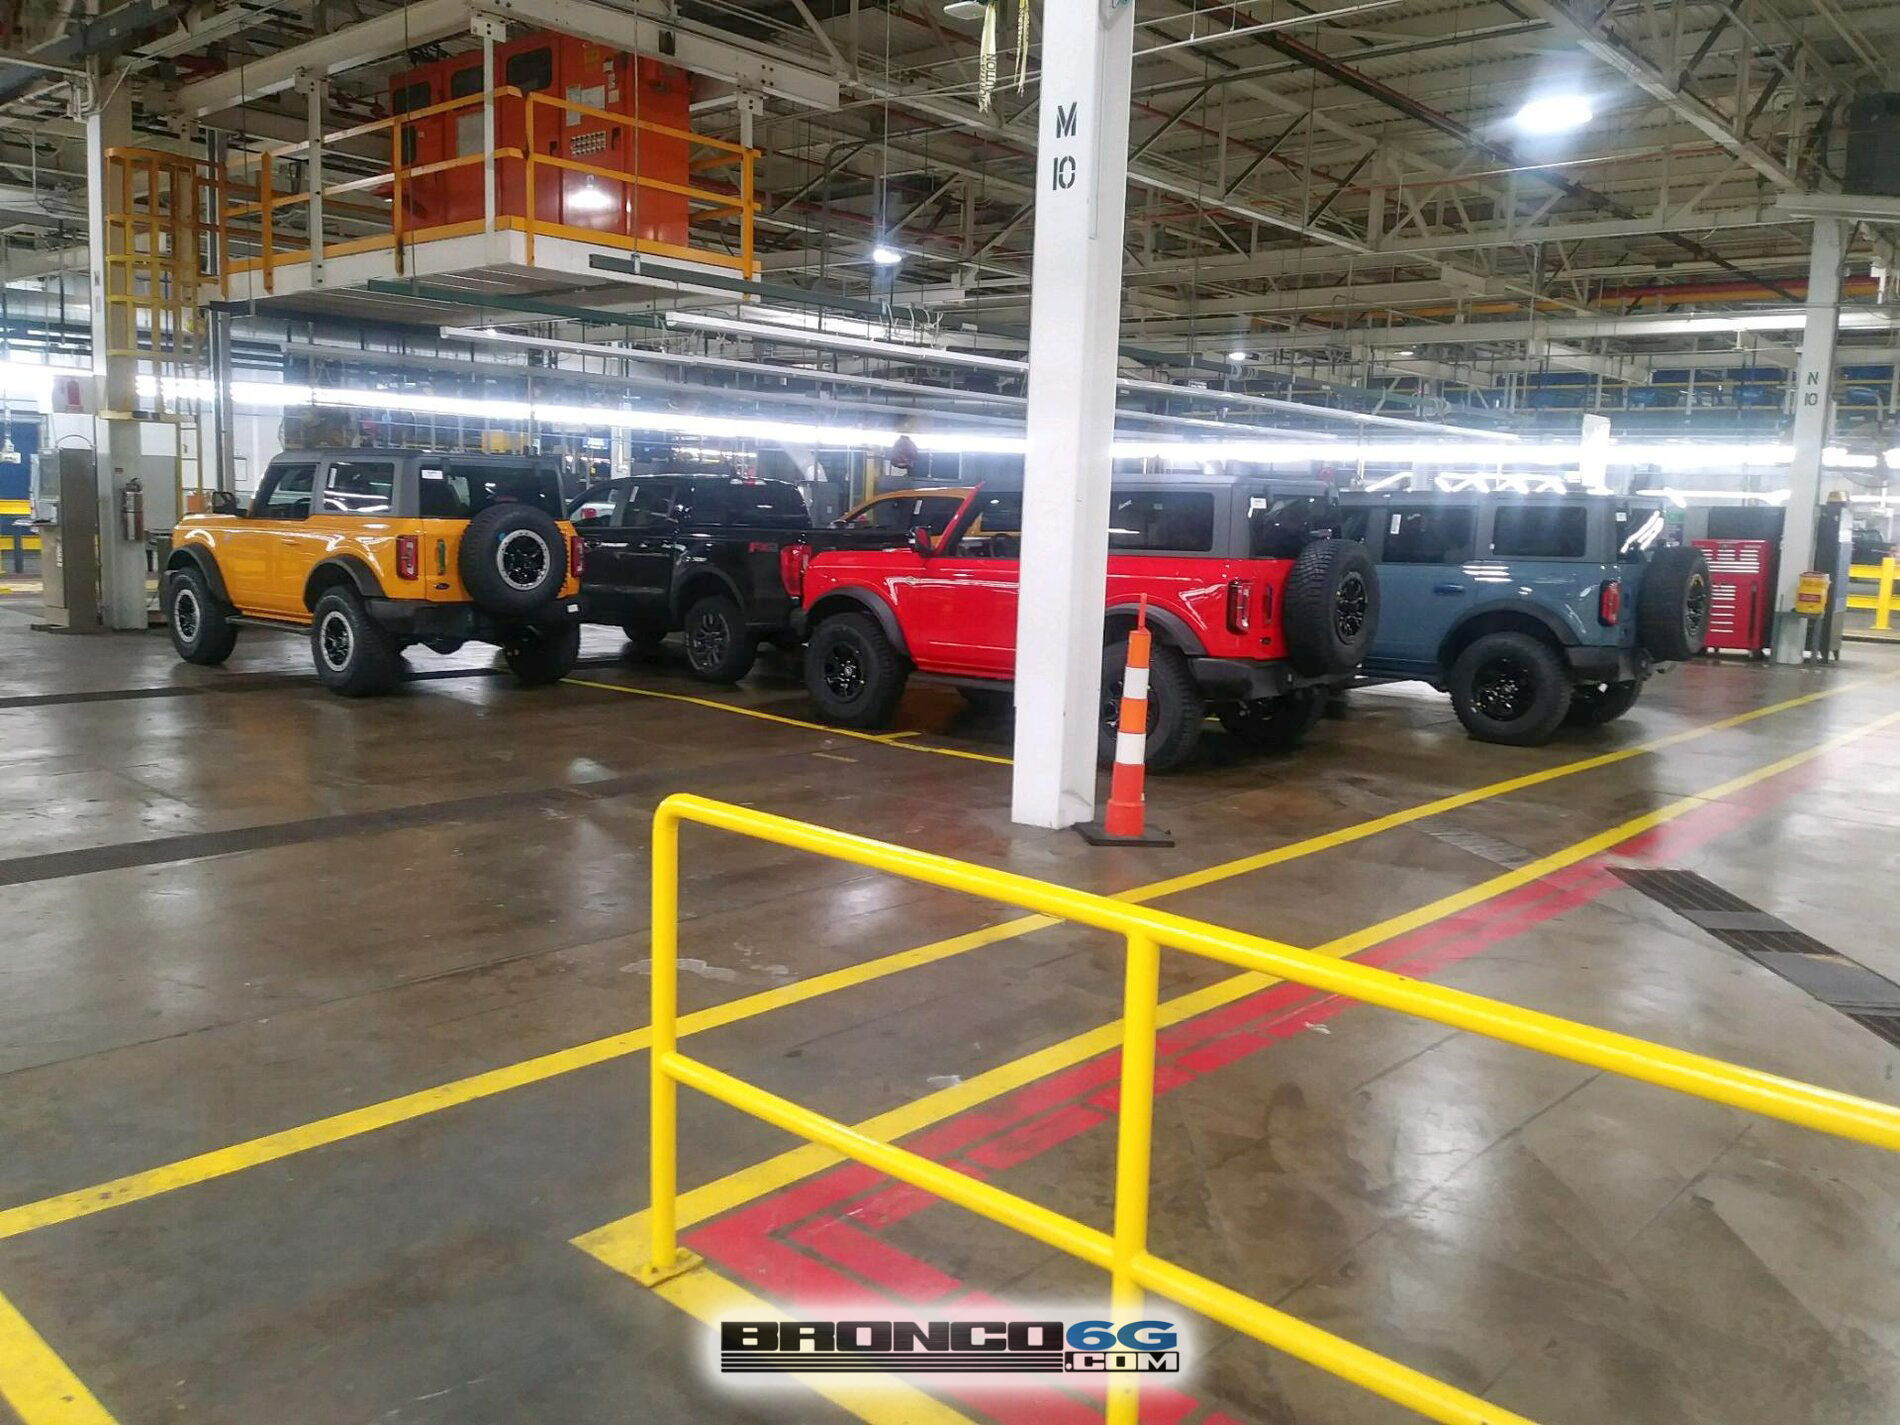 2021 Bronco interior factory production line photos 3.jpg